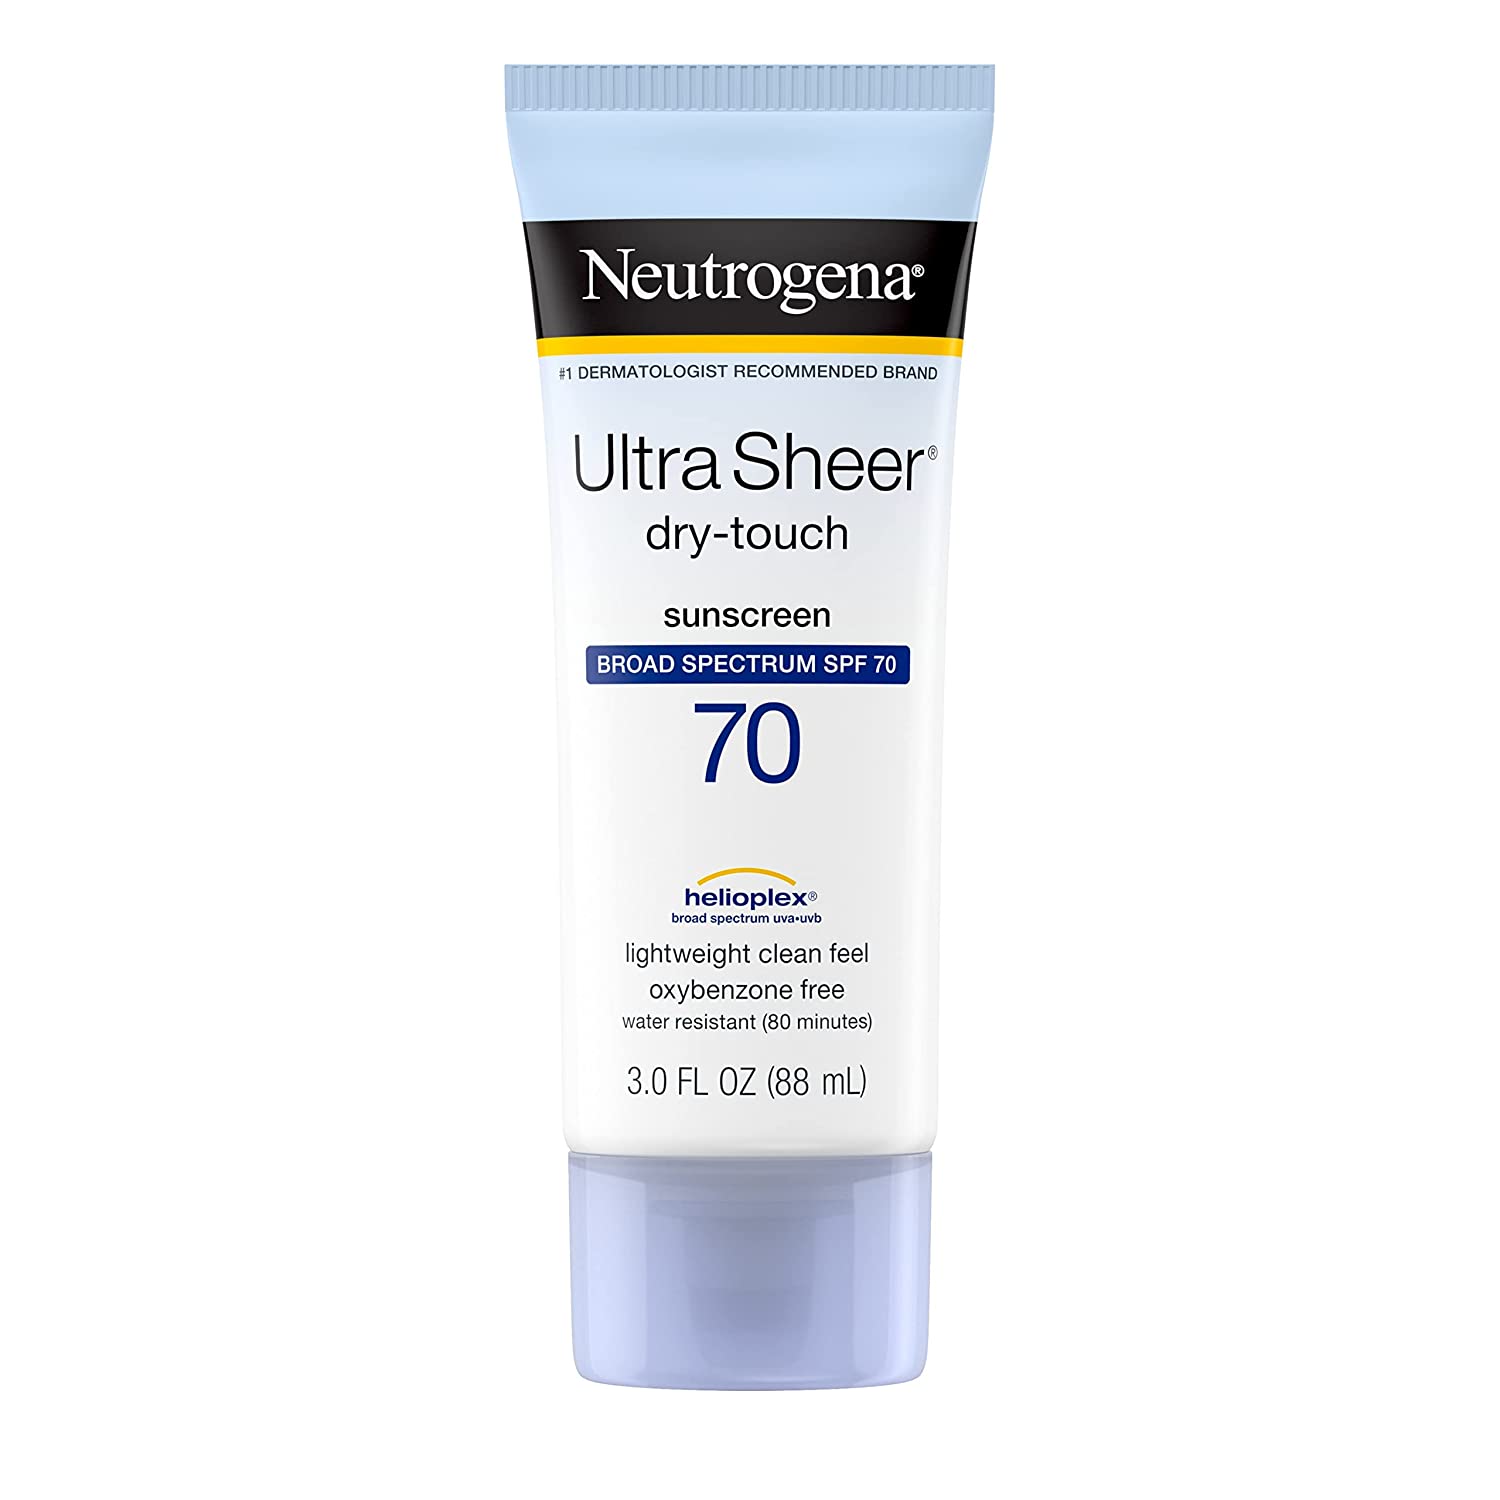 Neutrogena Ultra Sheer Dry-touch Sunscreen Broad Spectrum Spf 70 (88ml) Beautiful